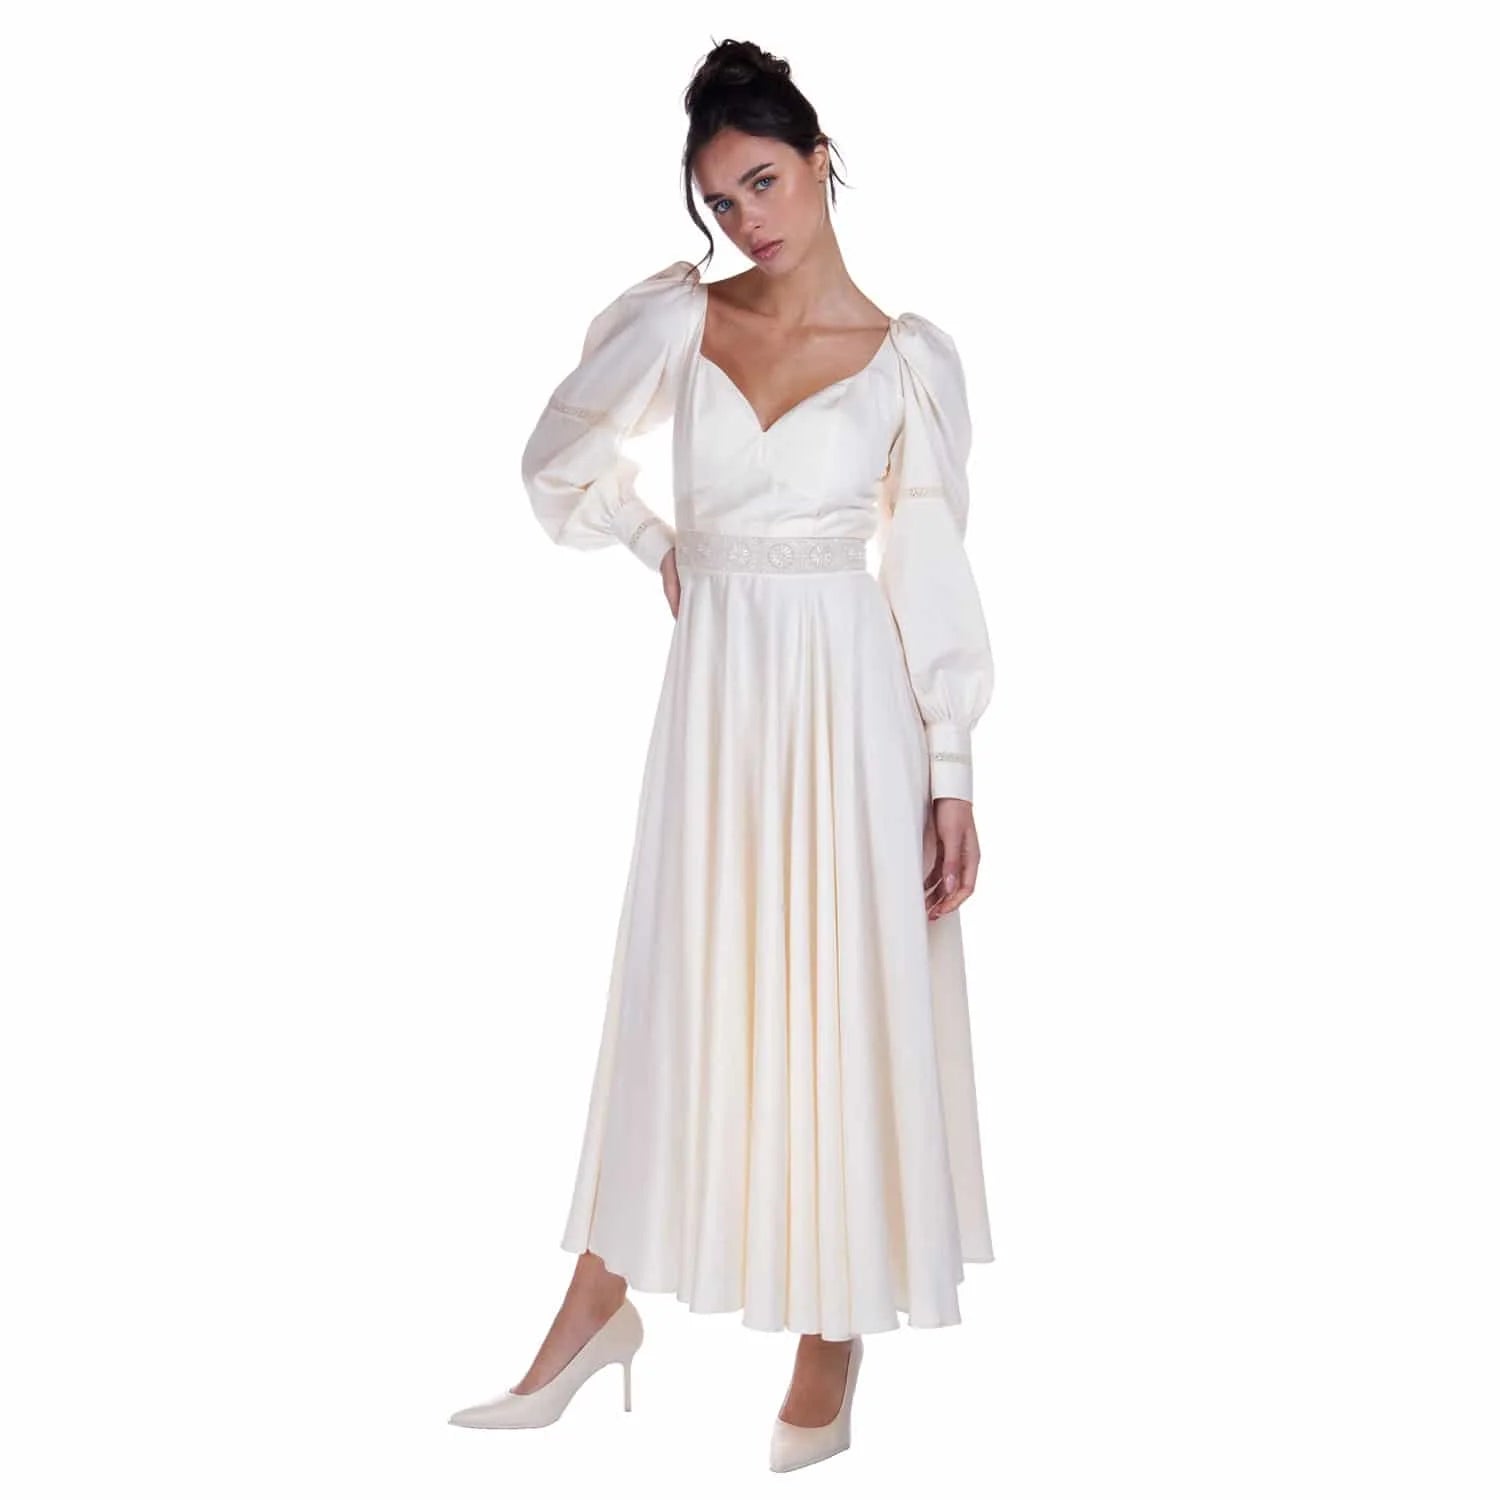 Cotton dress - Dress